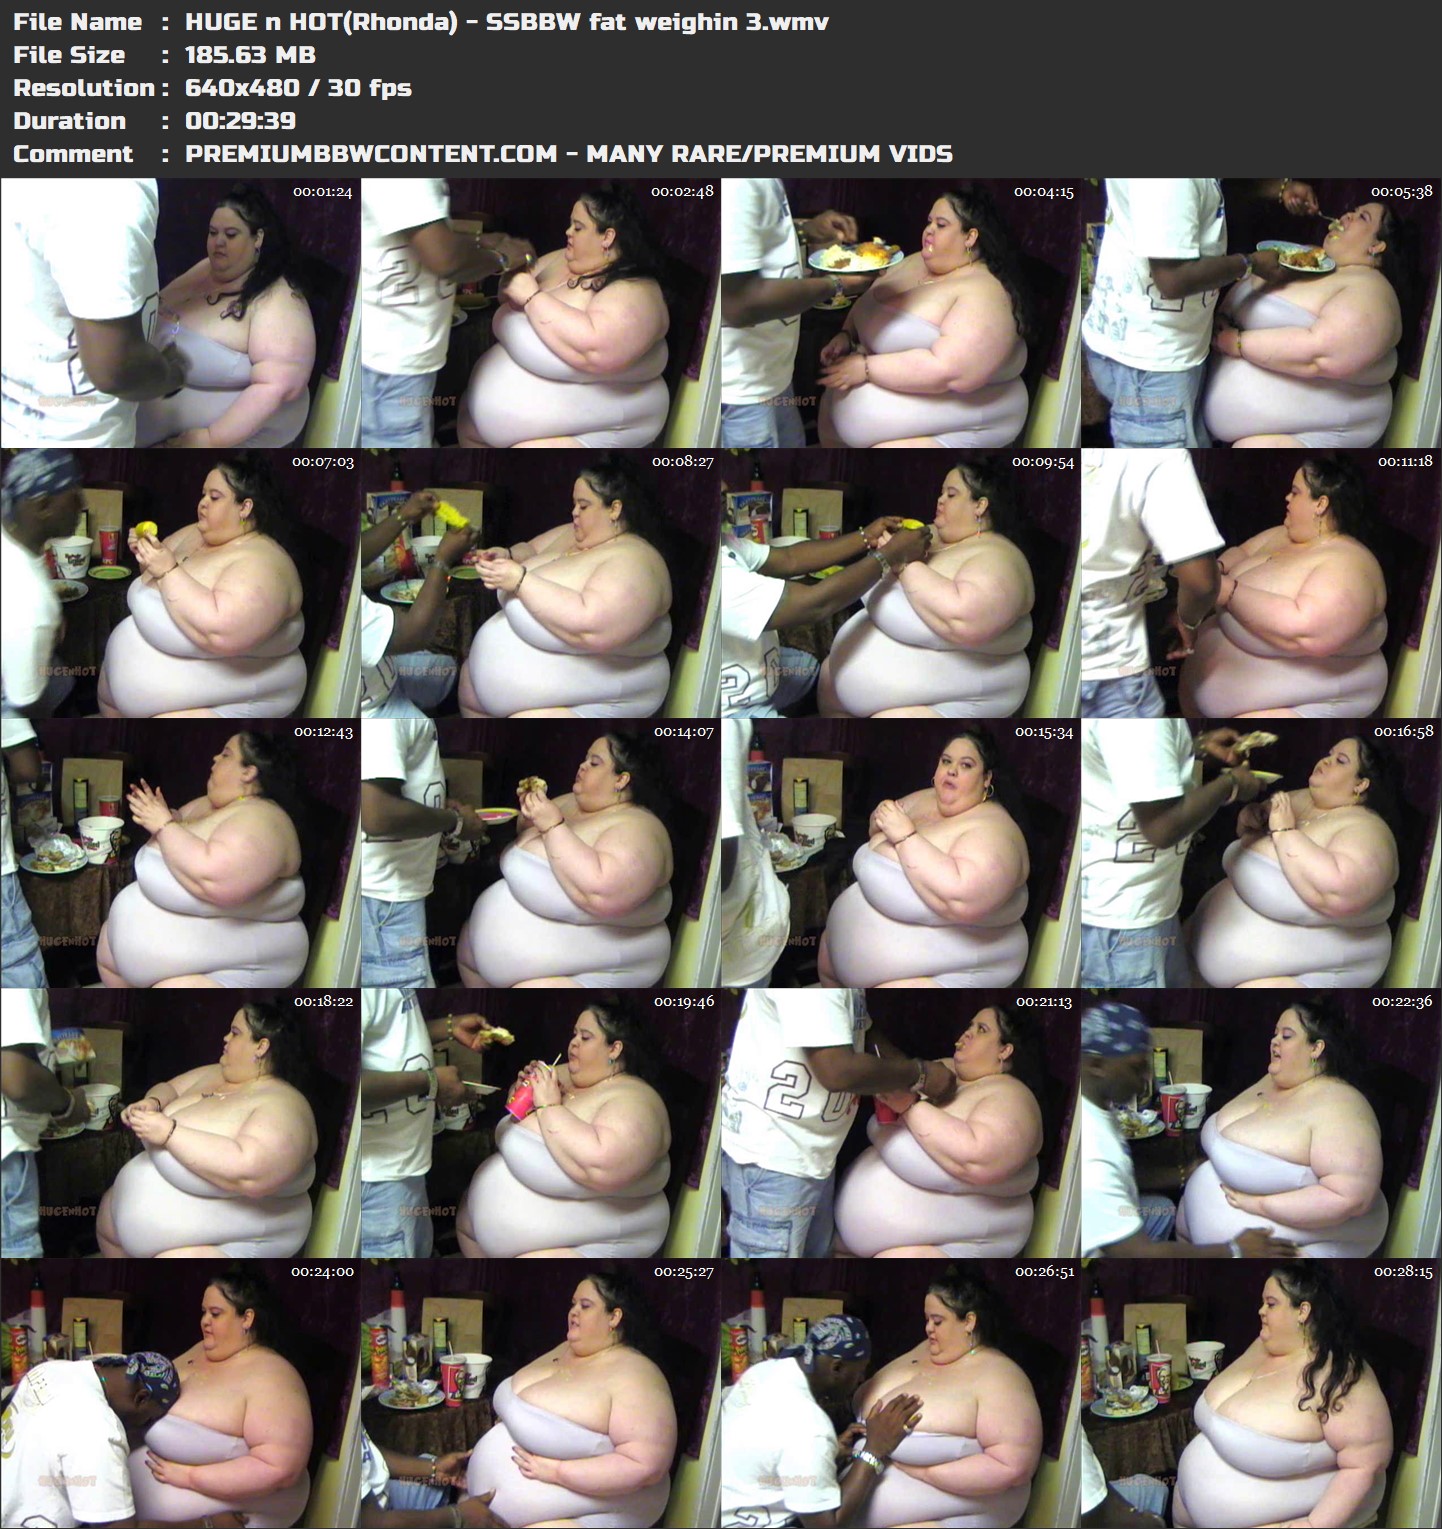 HUGE n HOT(Rhonda) - SSBBW fat weighin 3 thumbnails